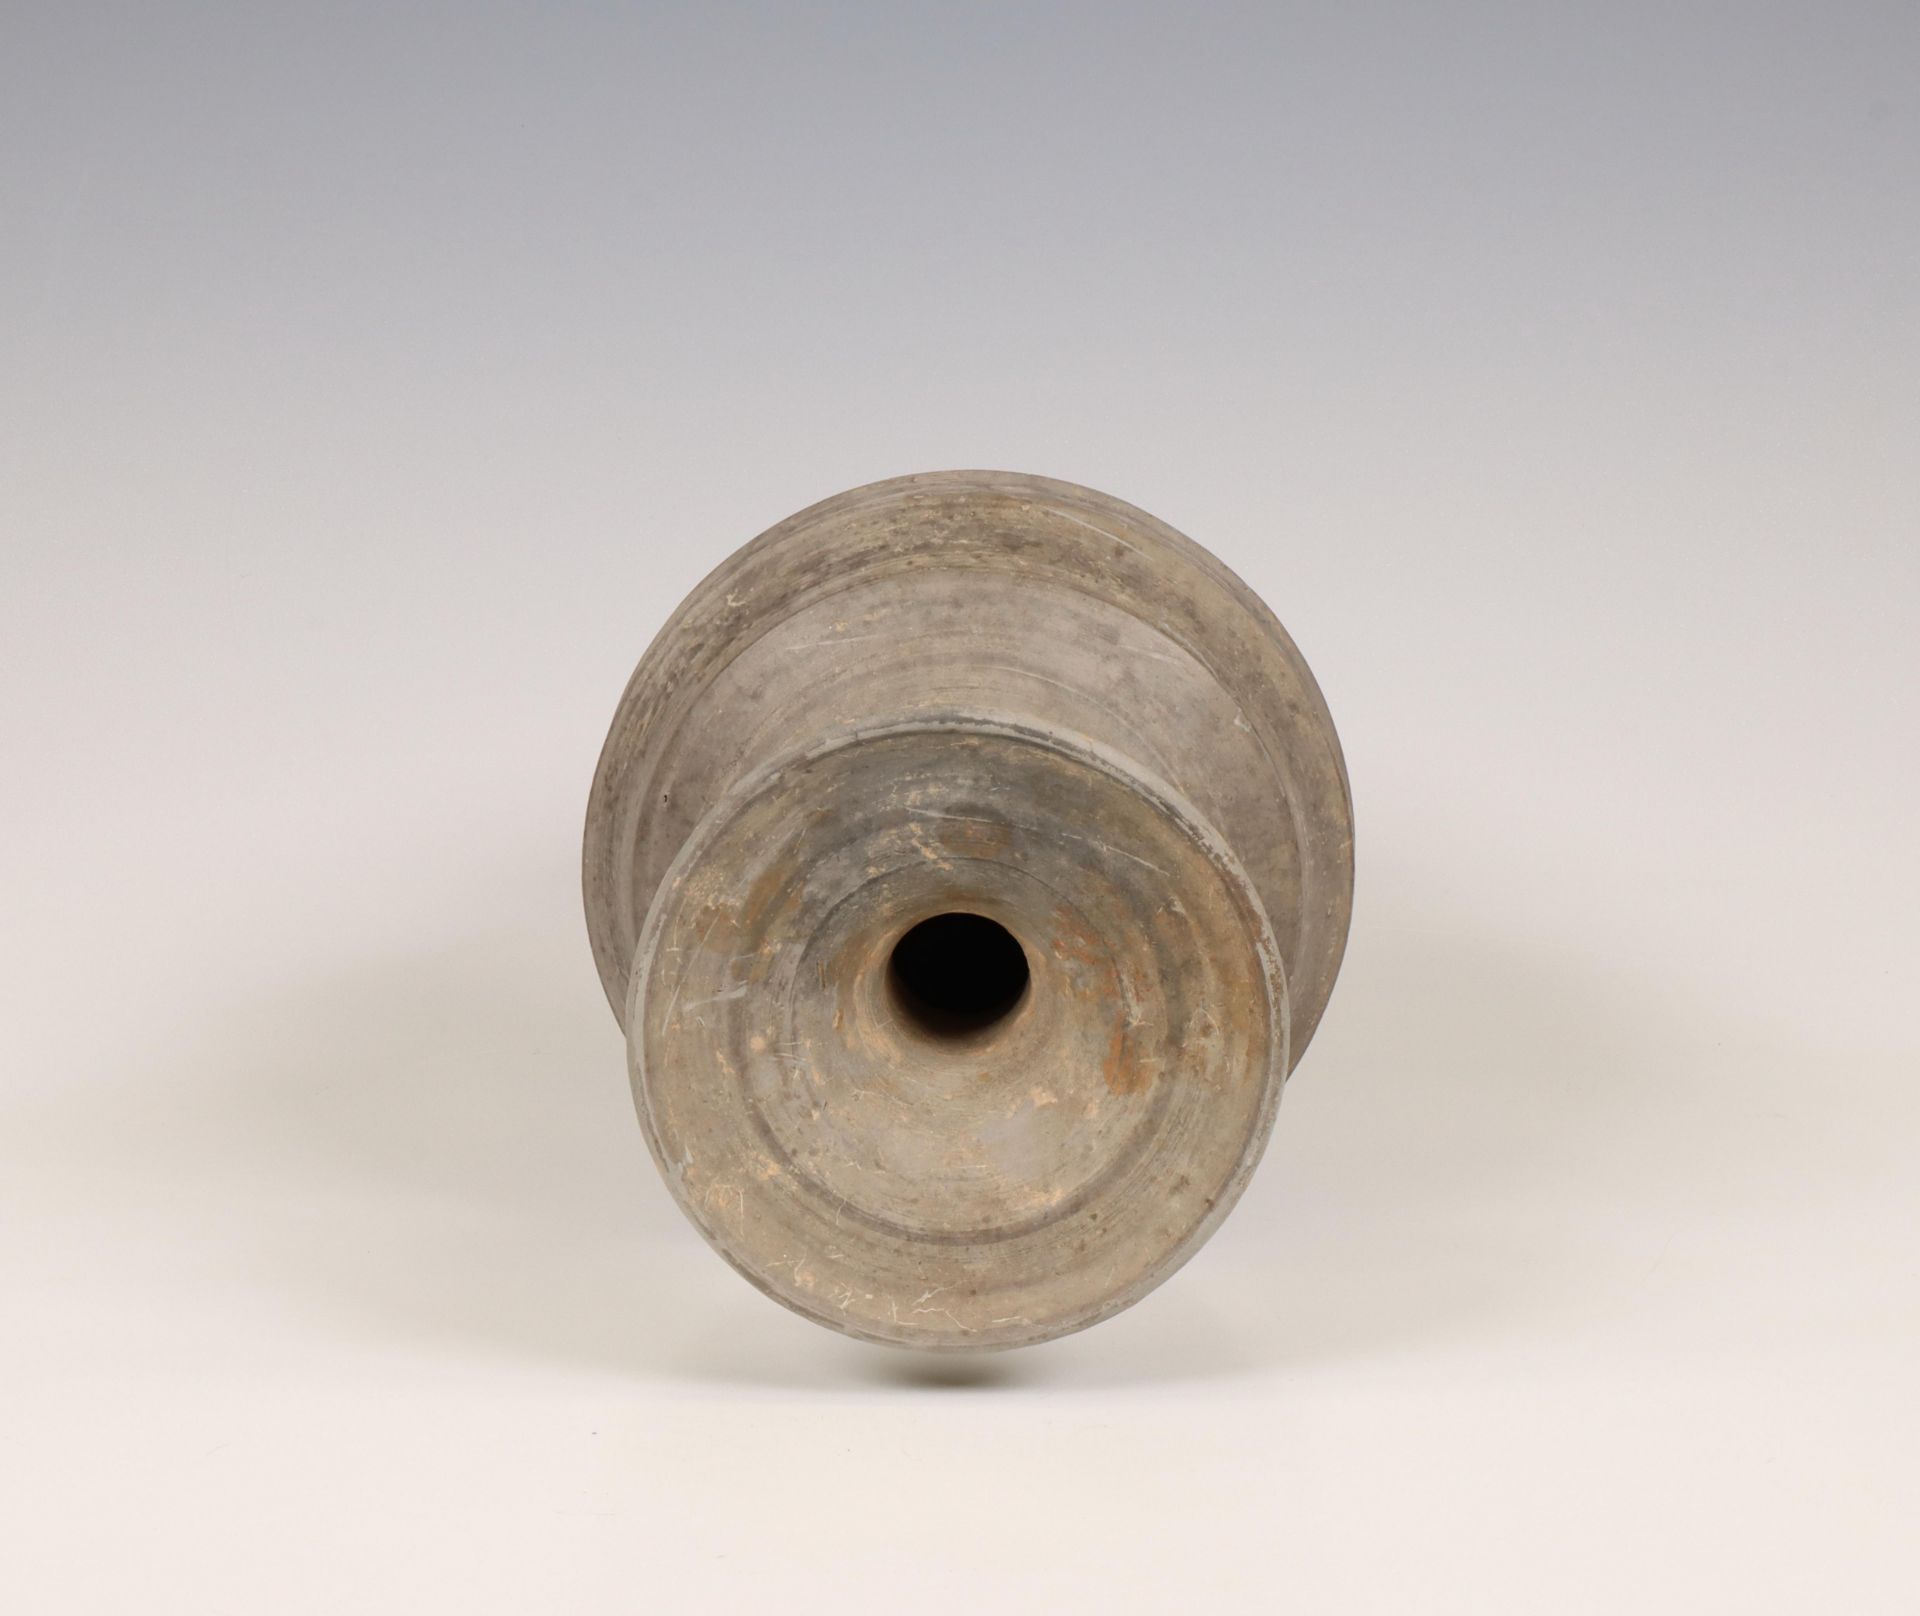 China, grey pottery vase , probably Han dynasty (206 BC-220 AD), - Image 2 of 4